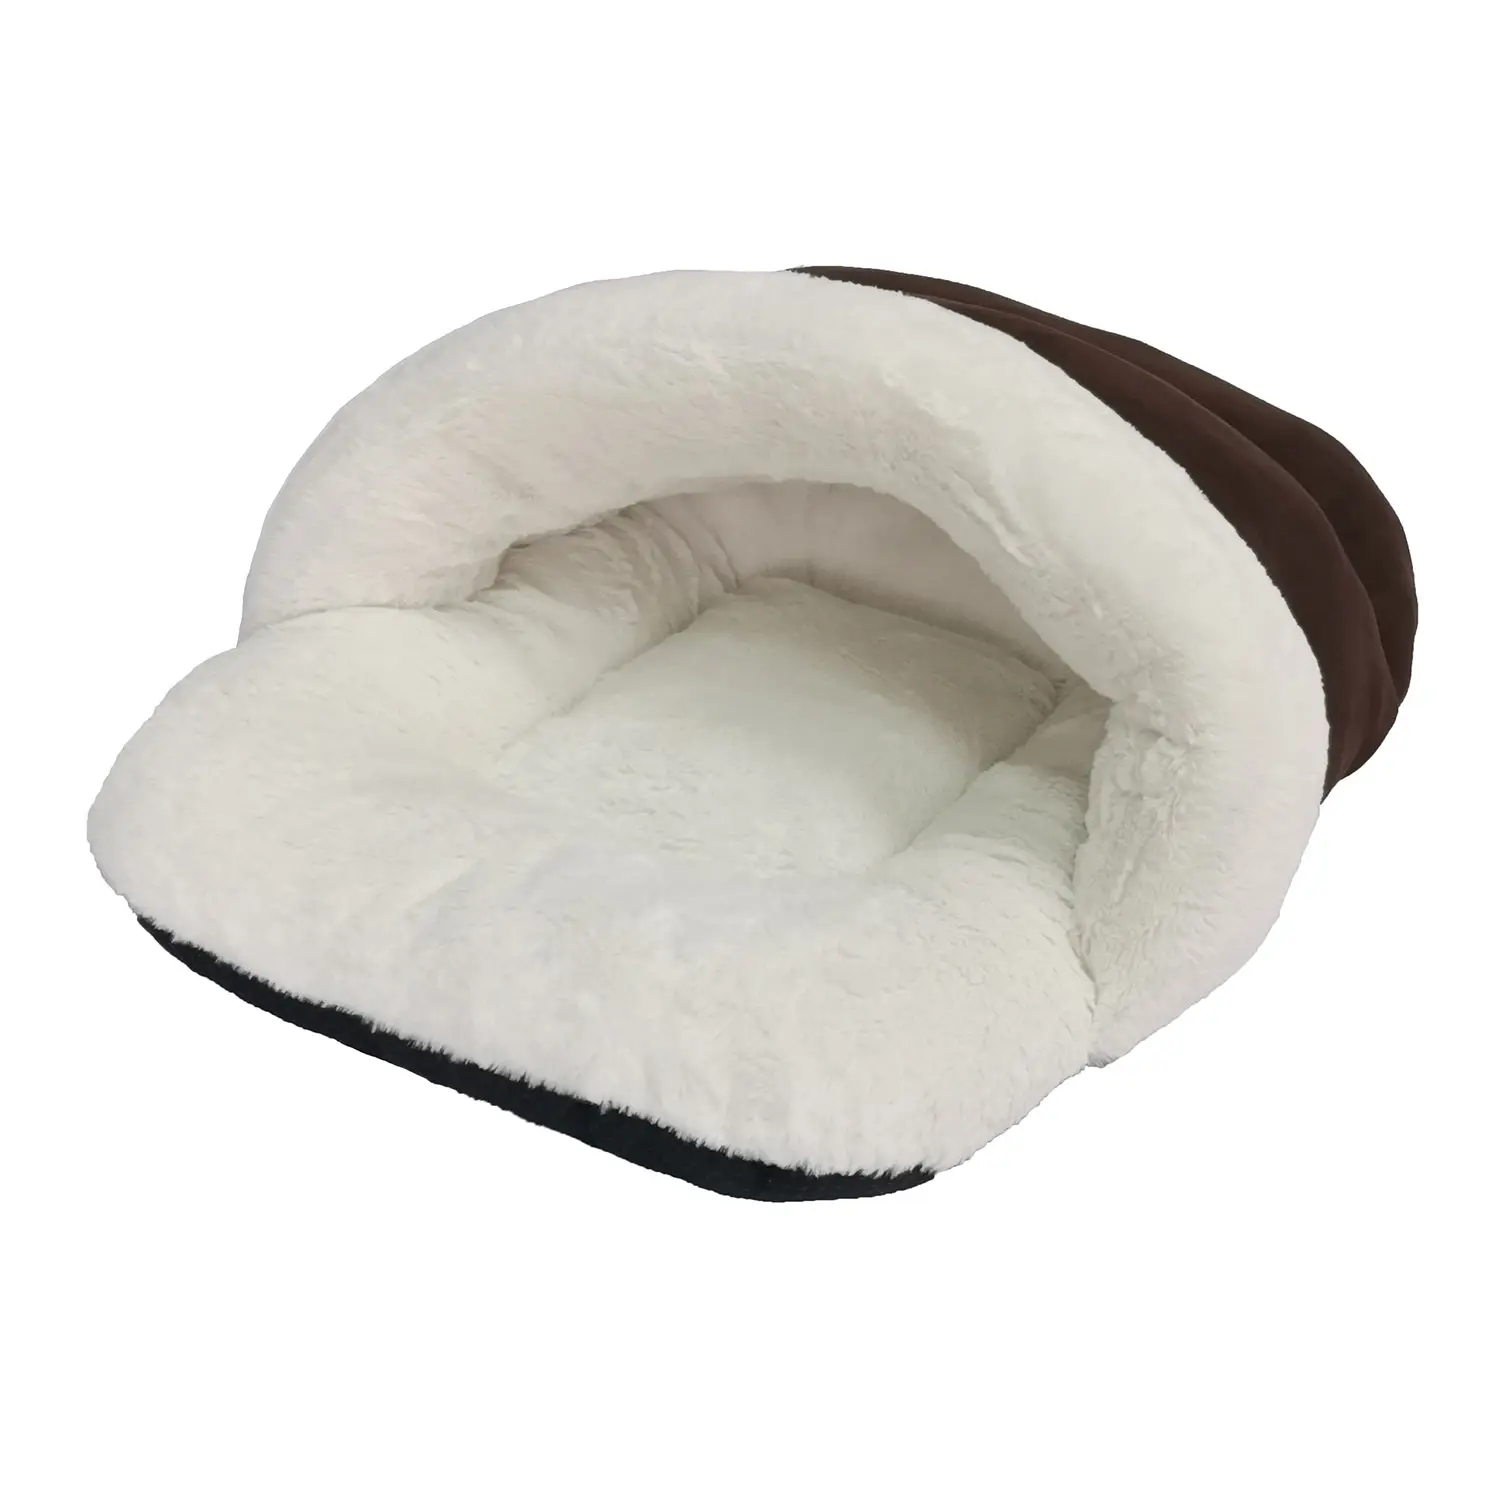 YangyangPet Amazon Hot Sale New Pet Premium Innovation Design Cat Slipper Bed Self-warming Dog And Cat Bed